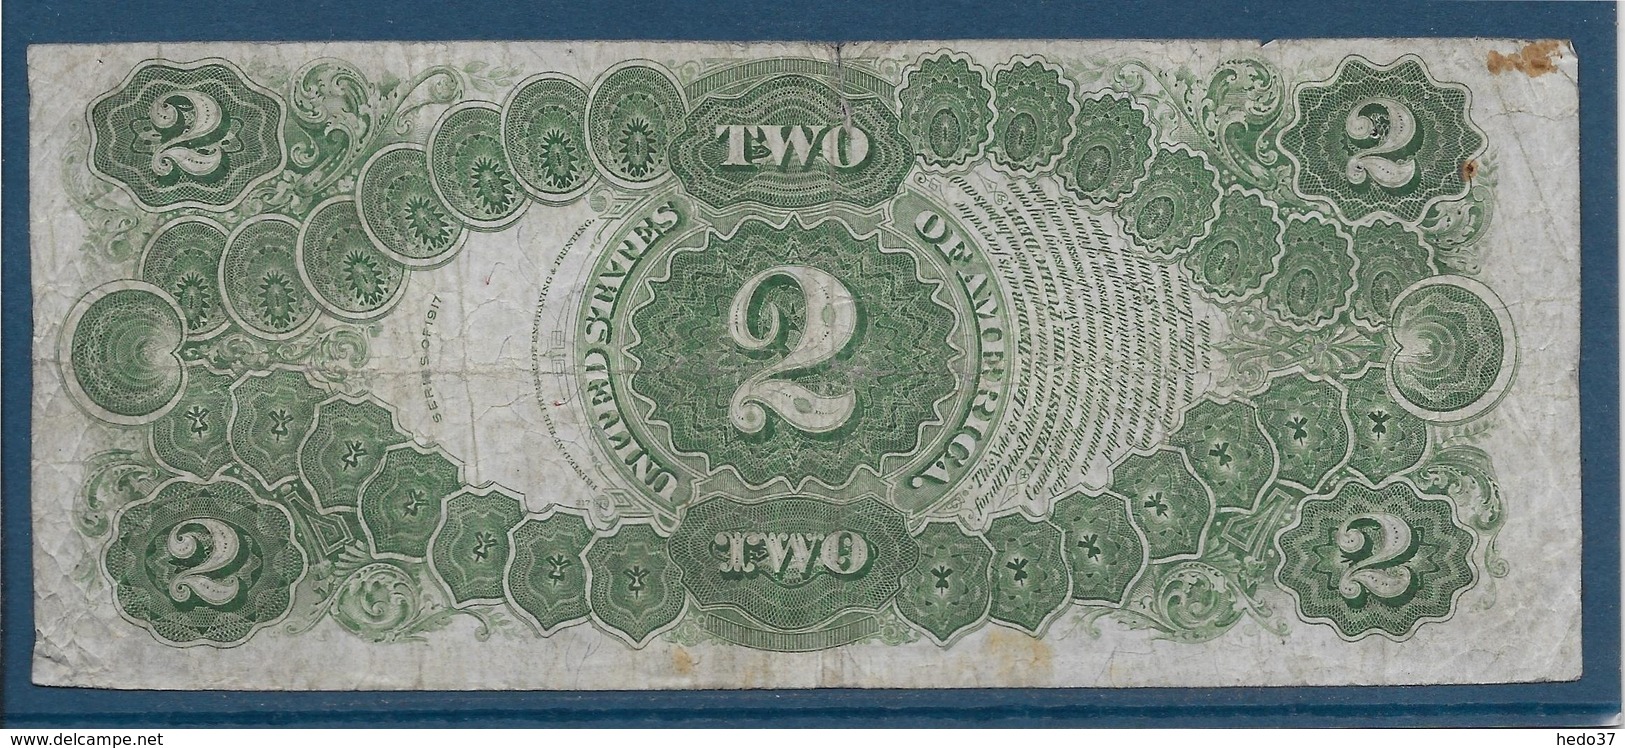 Etats Unis - 2 Dollars - 1917 - Pick N°188 - TB - Billets Des États-Unis (1862-1923)